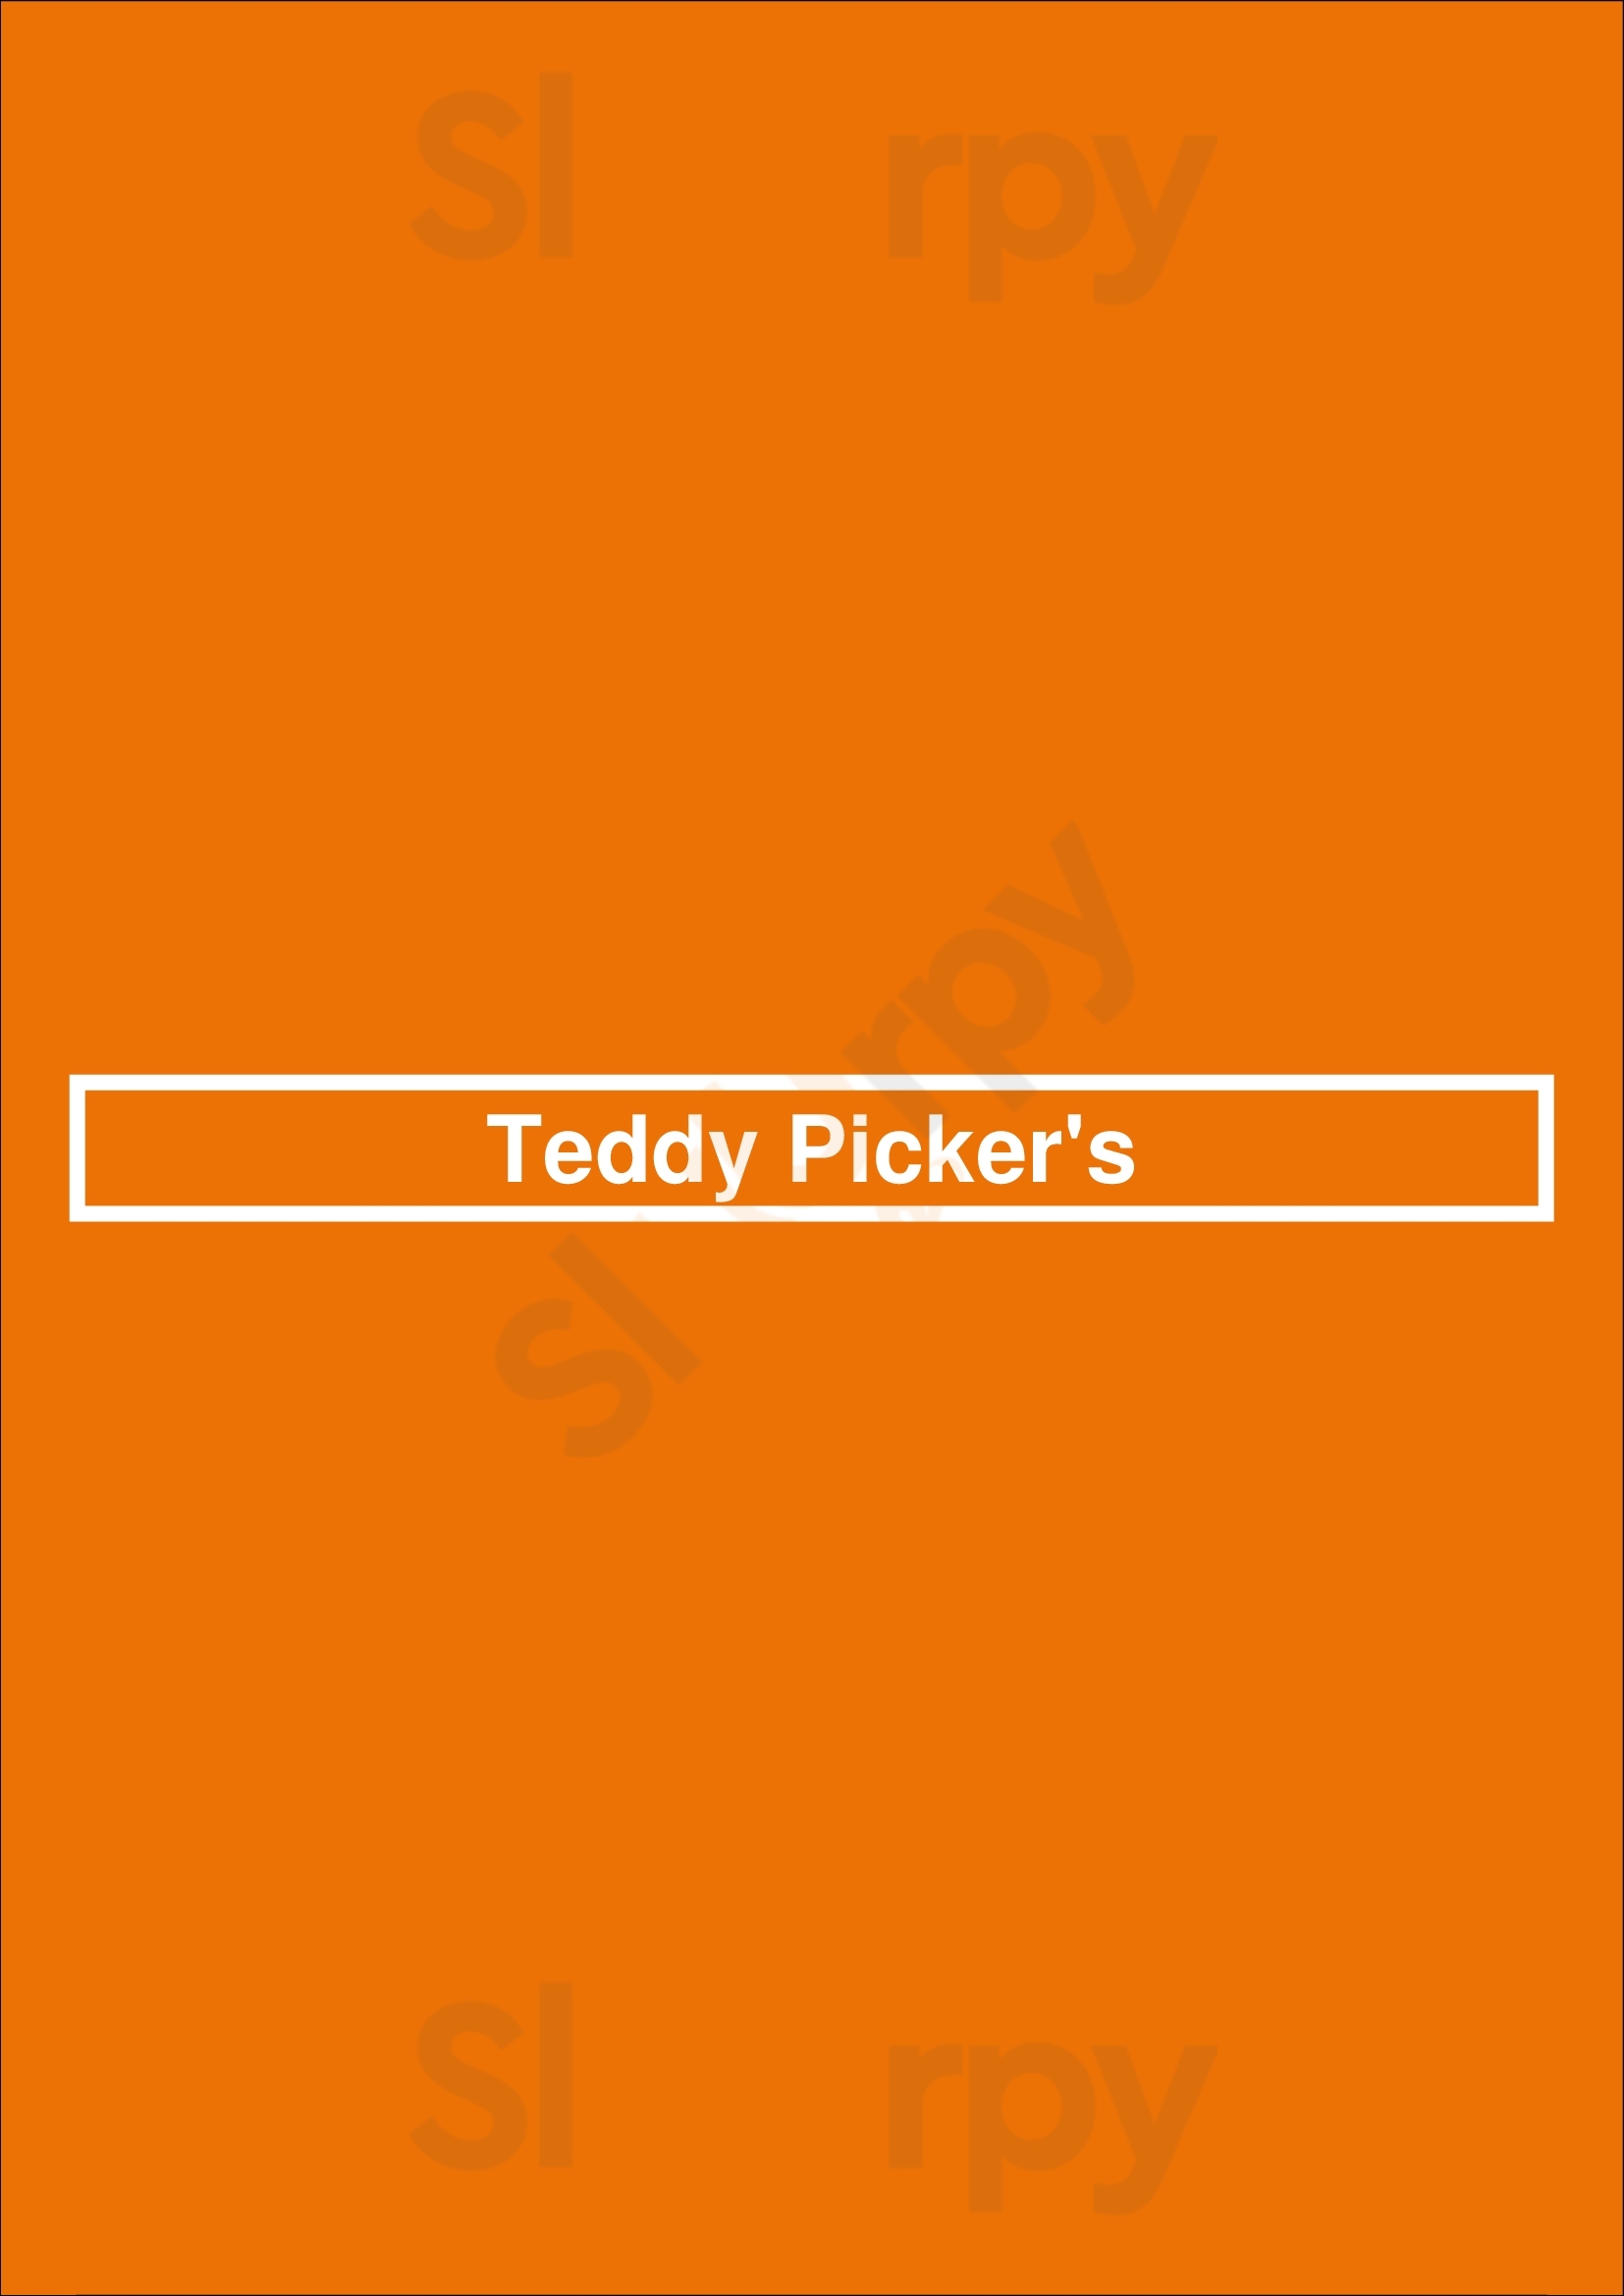 Teddy Picker's Canberra Menu - 1